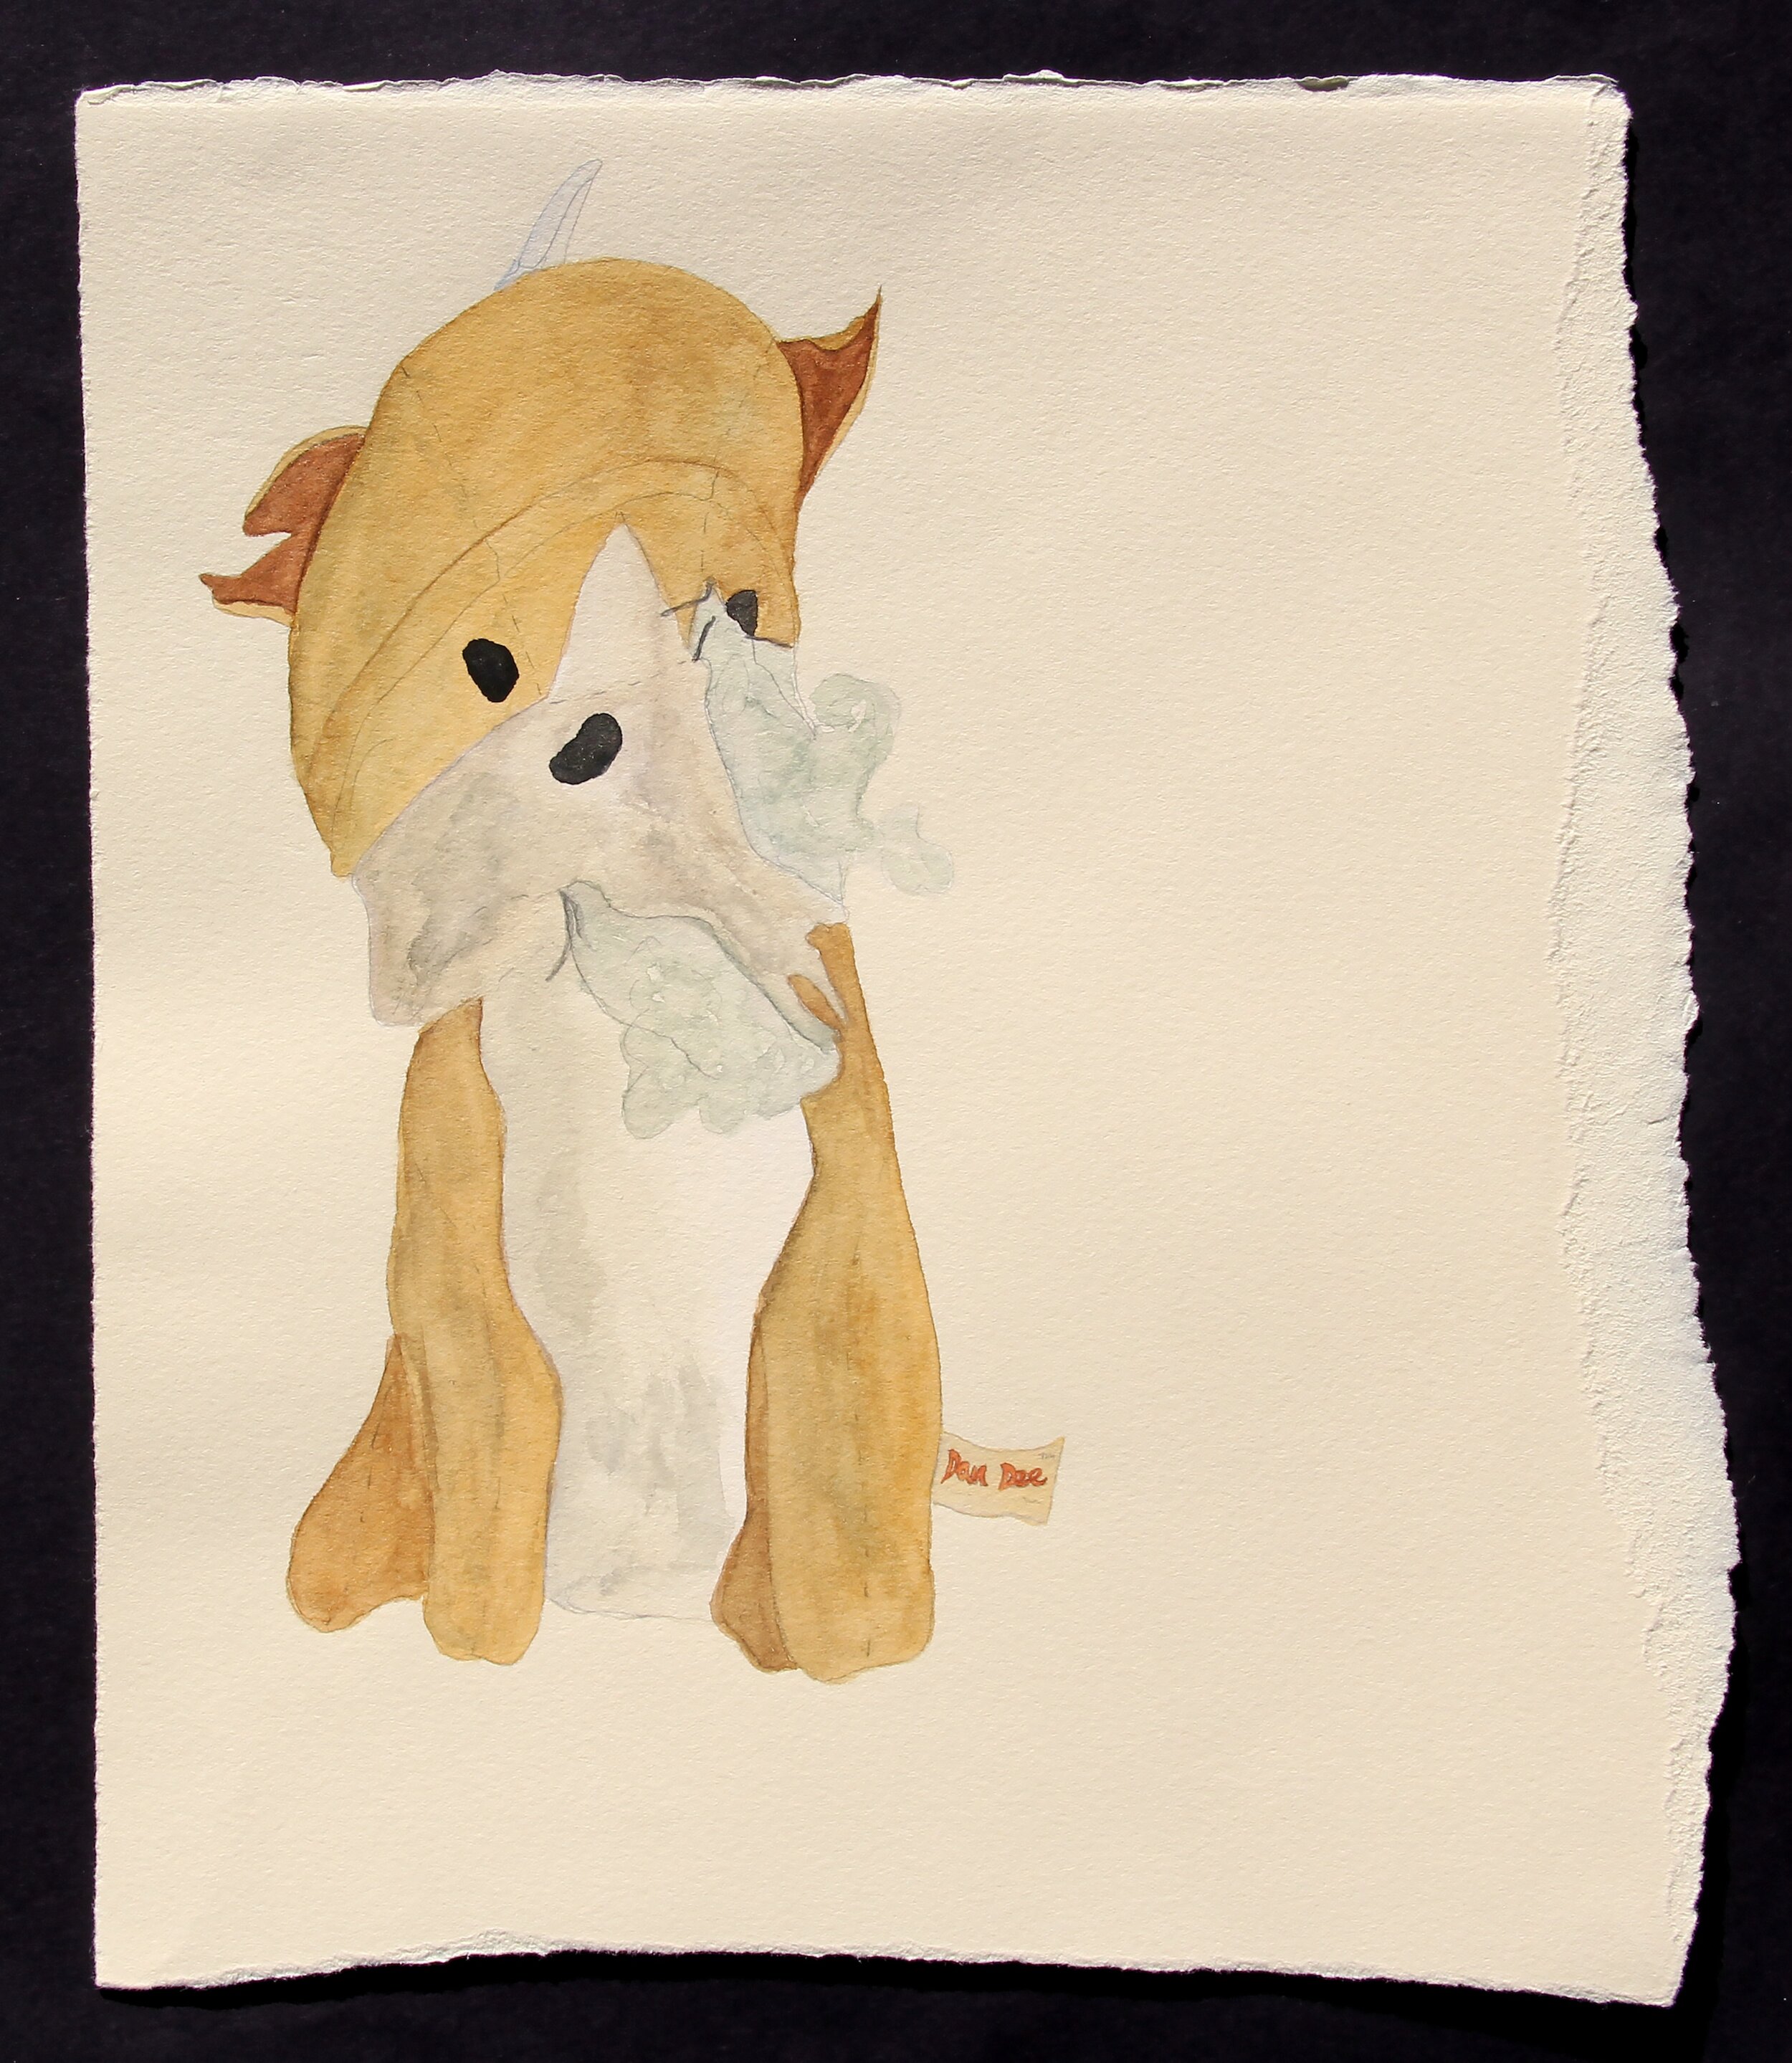 Myranda Bair, "Batty's Toys, Stuffed Dog", Watercolor on torn paper